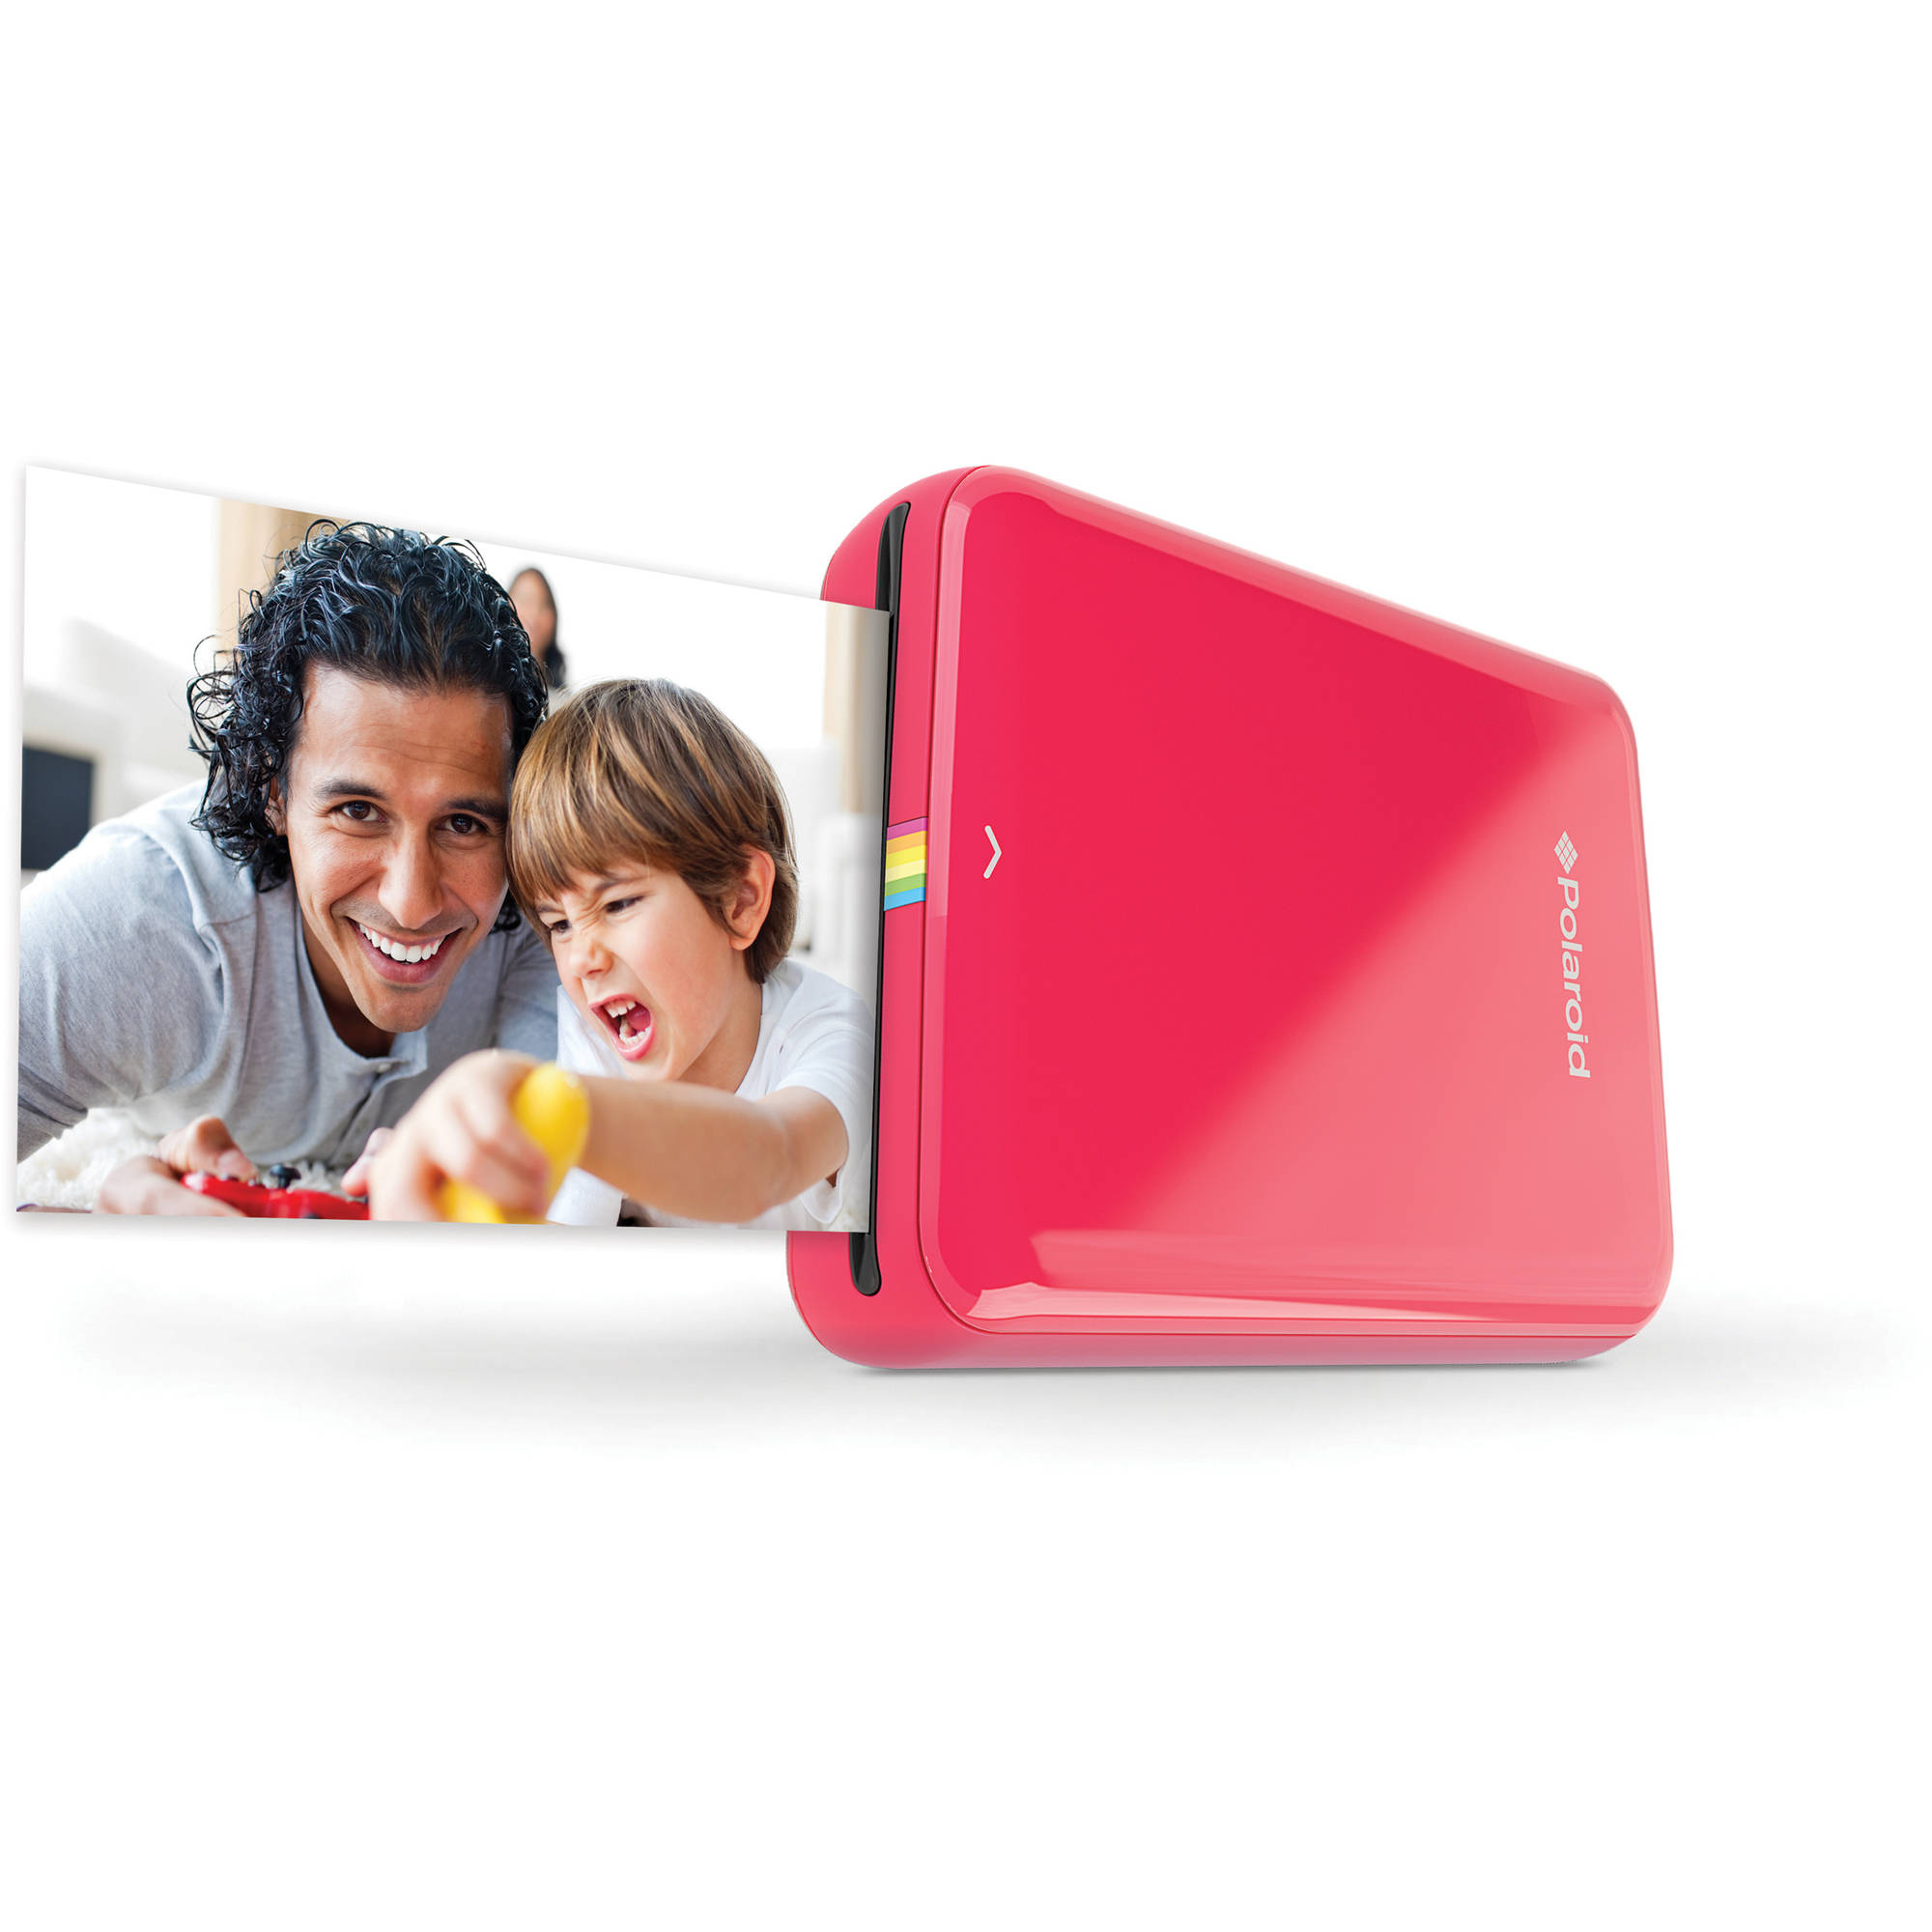 Polaroid Zip Mobile Instant Photo Printer, Red, POLMP01R - image 2 of 7